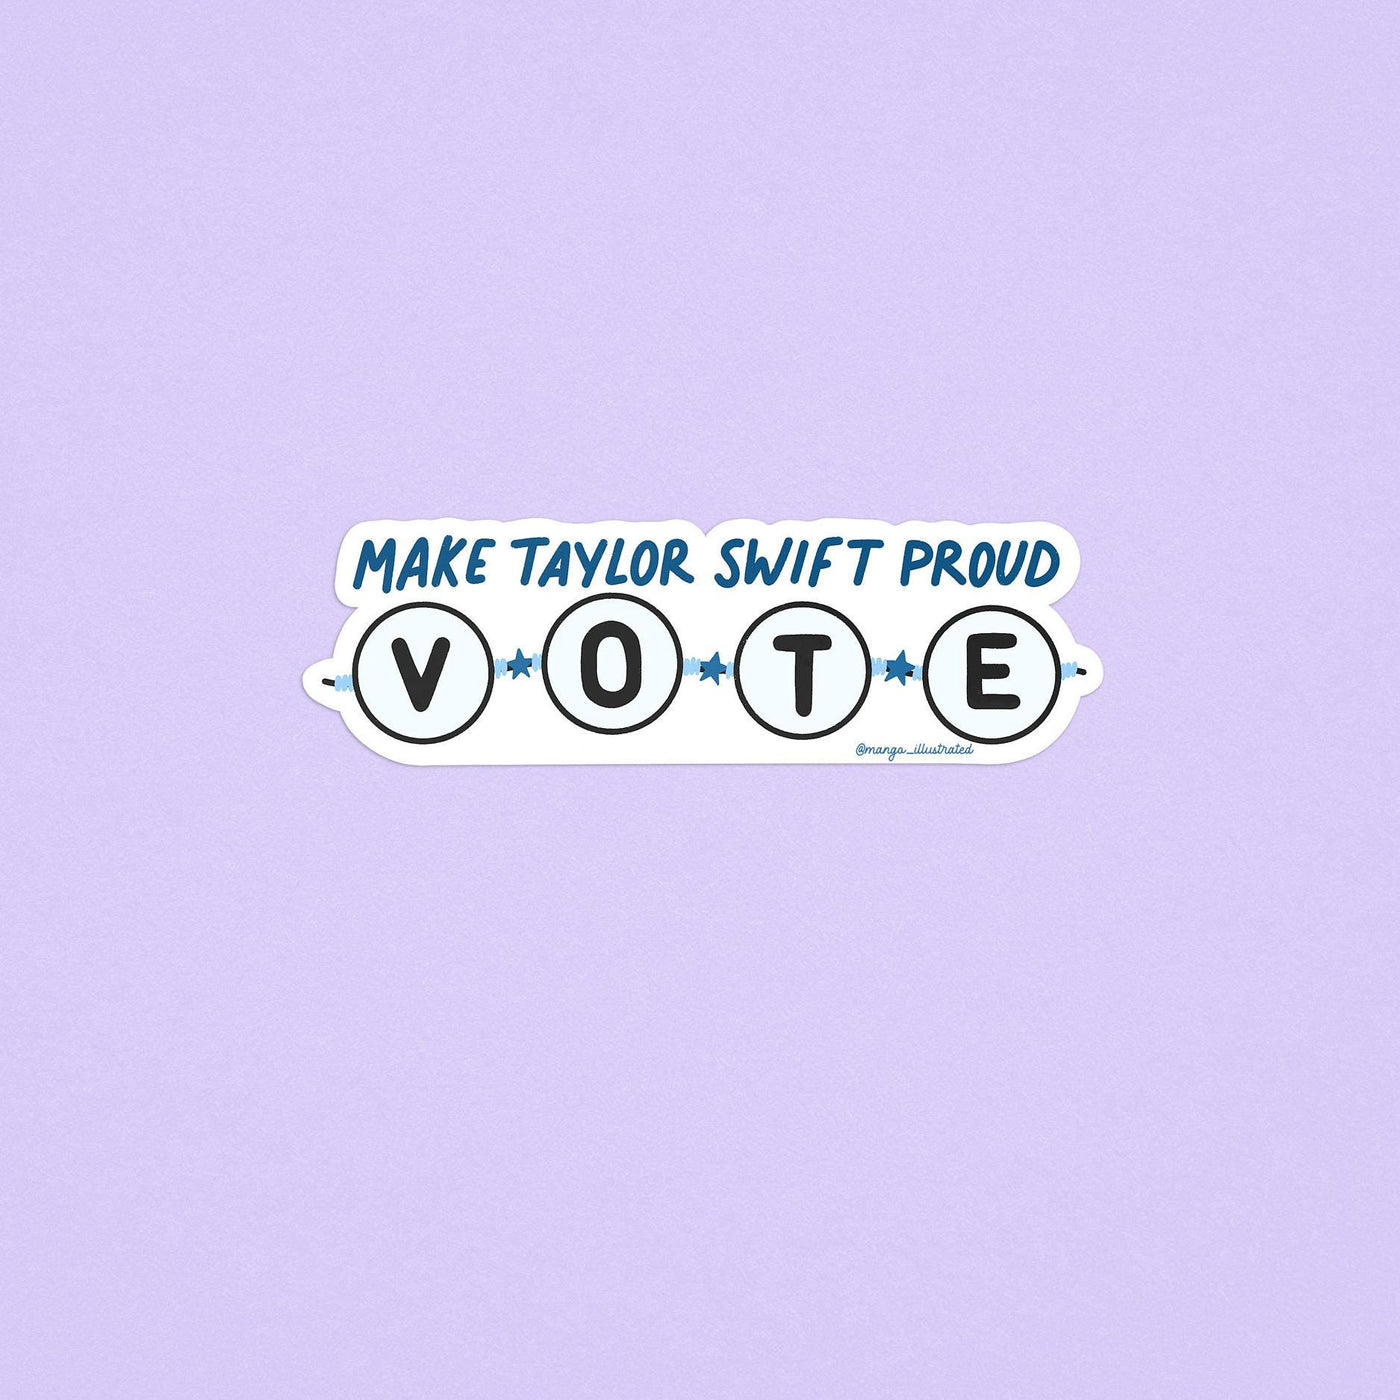 Make Taylor proud VOTE friendship bracelet sticker, Swiftie sticker, vote sticker, Taylor Swift vote inspired sticker, waterproof sticker